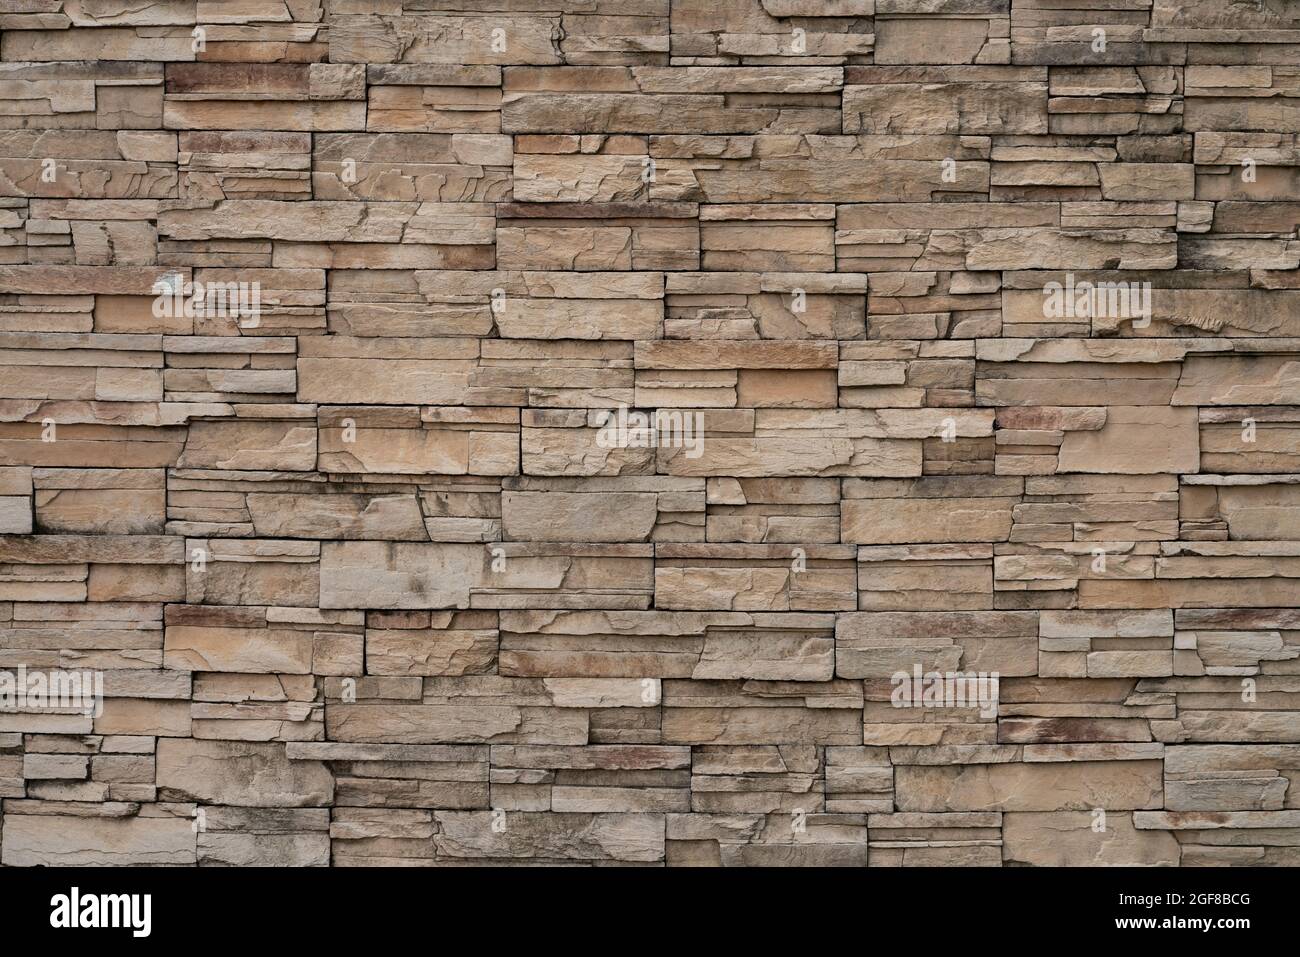 Wall brick texture facade - perfect backgrounds Stock Photo